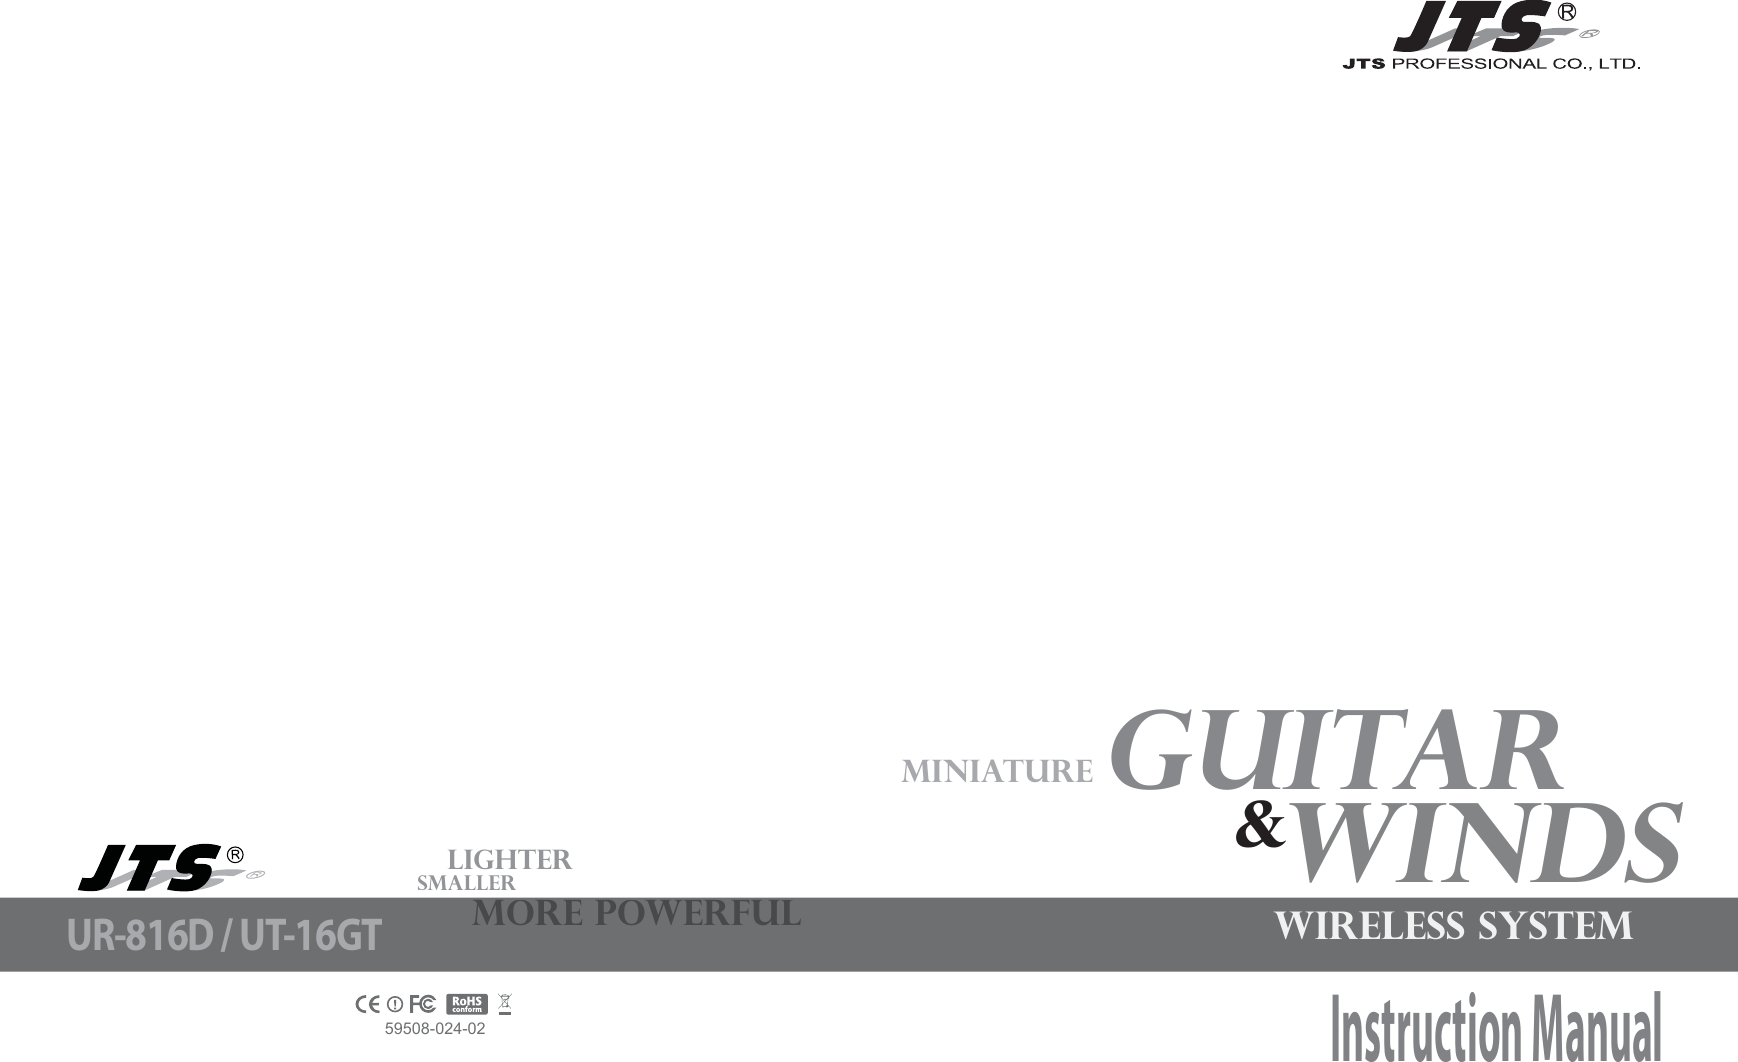 SmallerLighterMore PowerfulMiniaturewireless systemWinds Guitar&amp;Instruction Manual59508-024-02UR-816D / UT-16GT